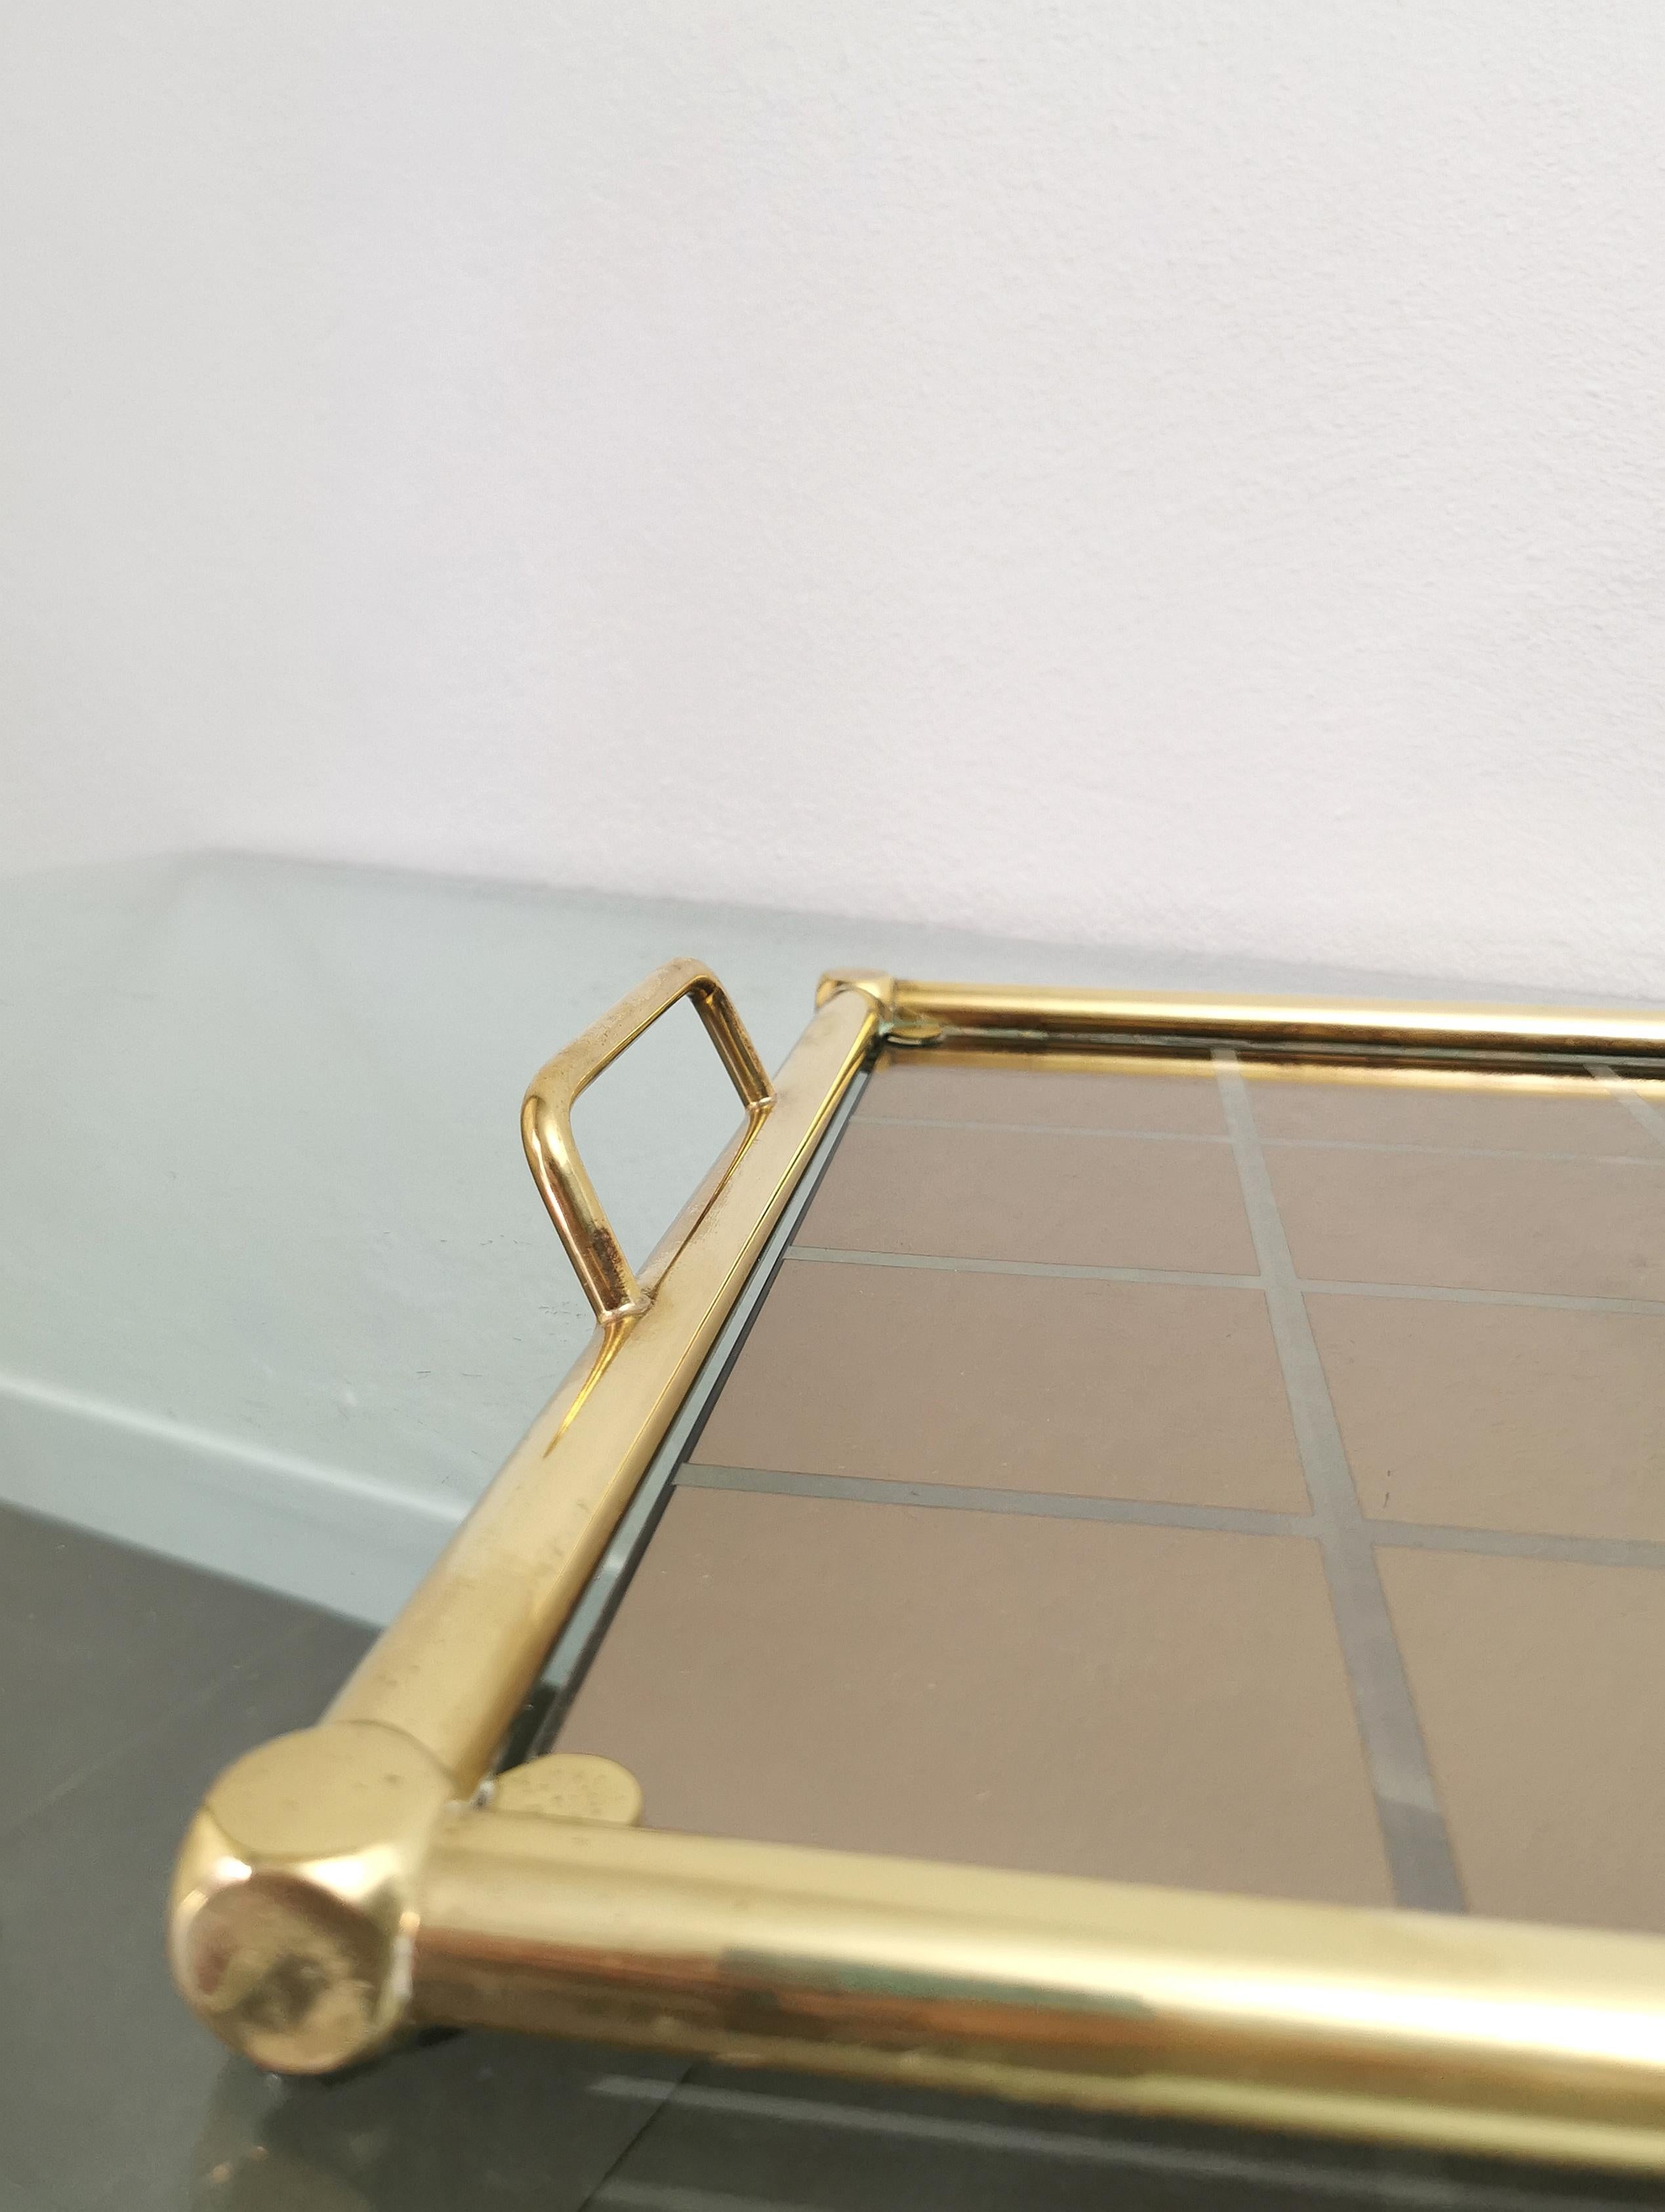 Midcentury Brass Tray Table Mirrored Glass Rectangular Italian Design, 1960s For Sale 3